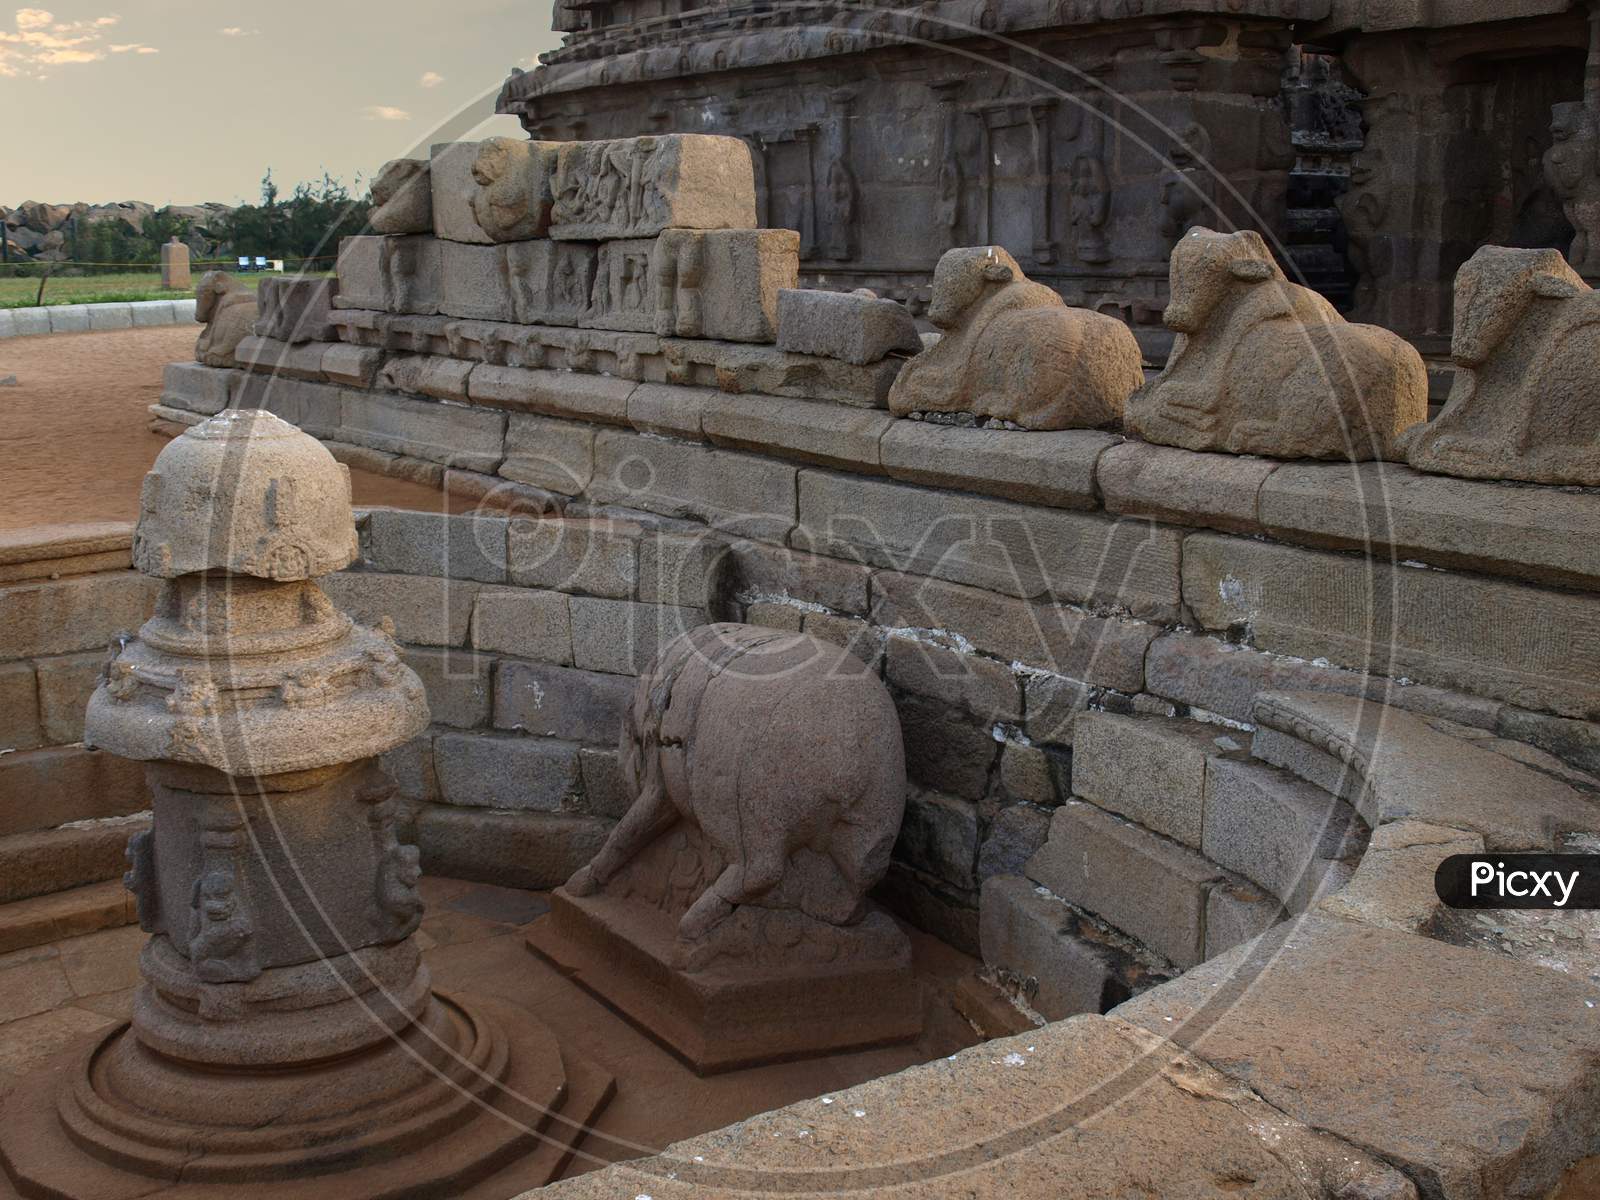 Bulls Carved In Stone With Intricate Stone Work At Mamallapuram, Tn, India